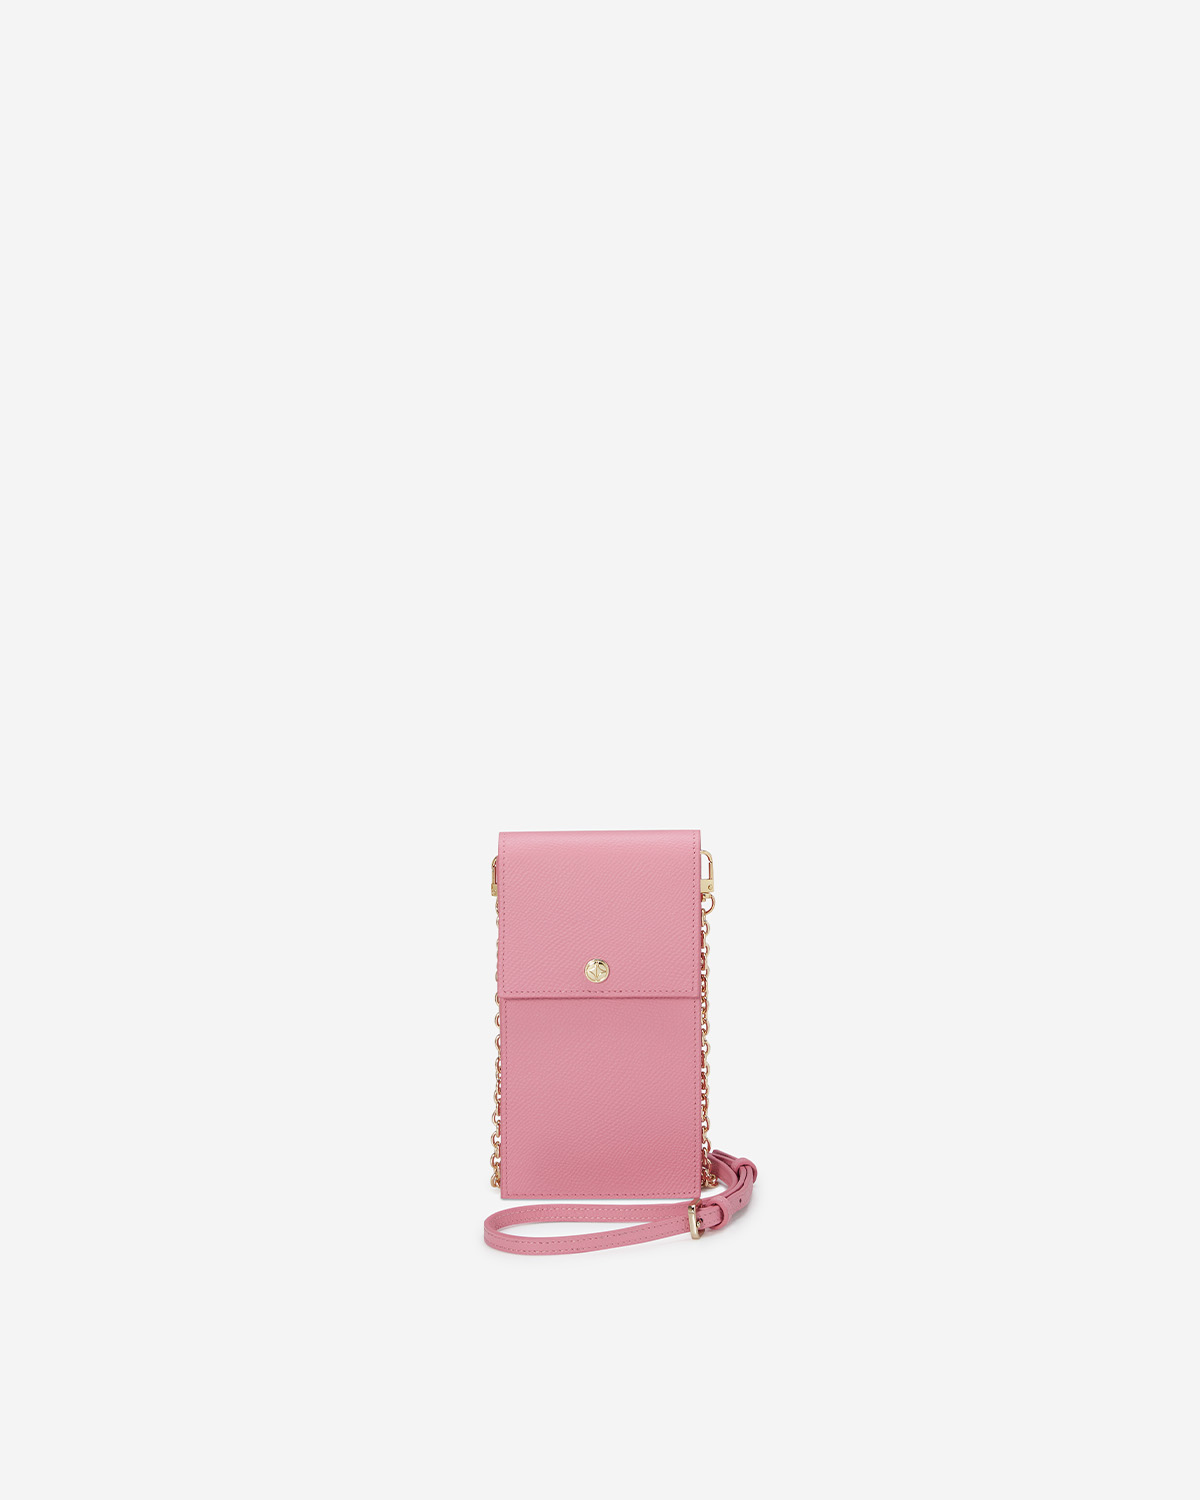 VERA Emily Phone Pouch with Leather Gold Chain in Creative Pink กระเป๋าใส่โทรศัพท์หนังแท้ พร้อมฟังก์ชั่นกระเป๋าสตางค์ มาพร้อมสายสะพายโซ่หนังถอดได้ สีชมพู